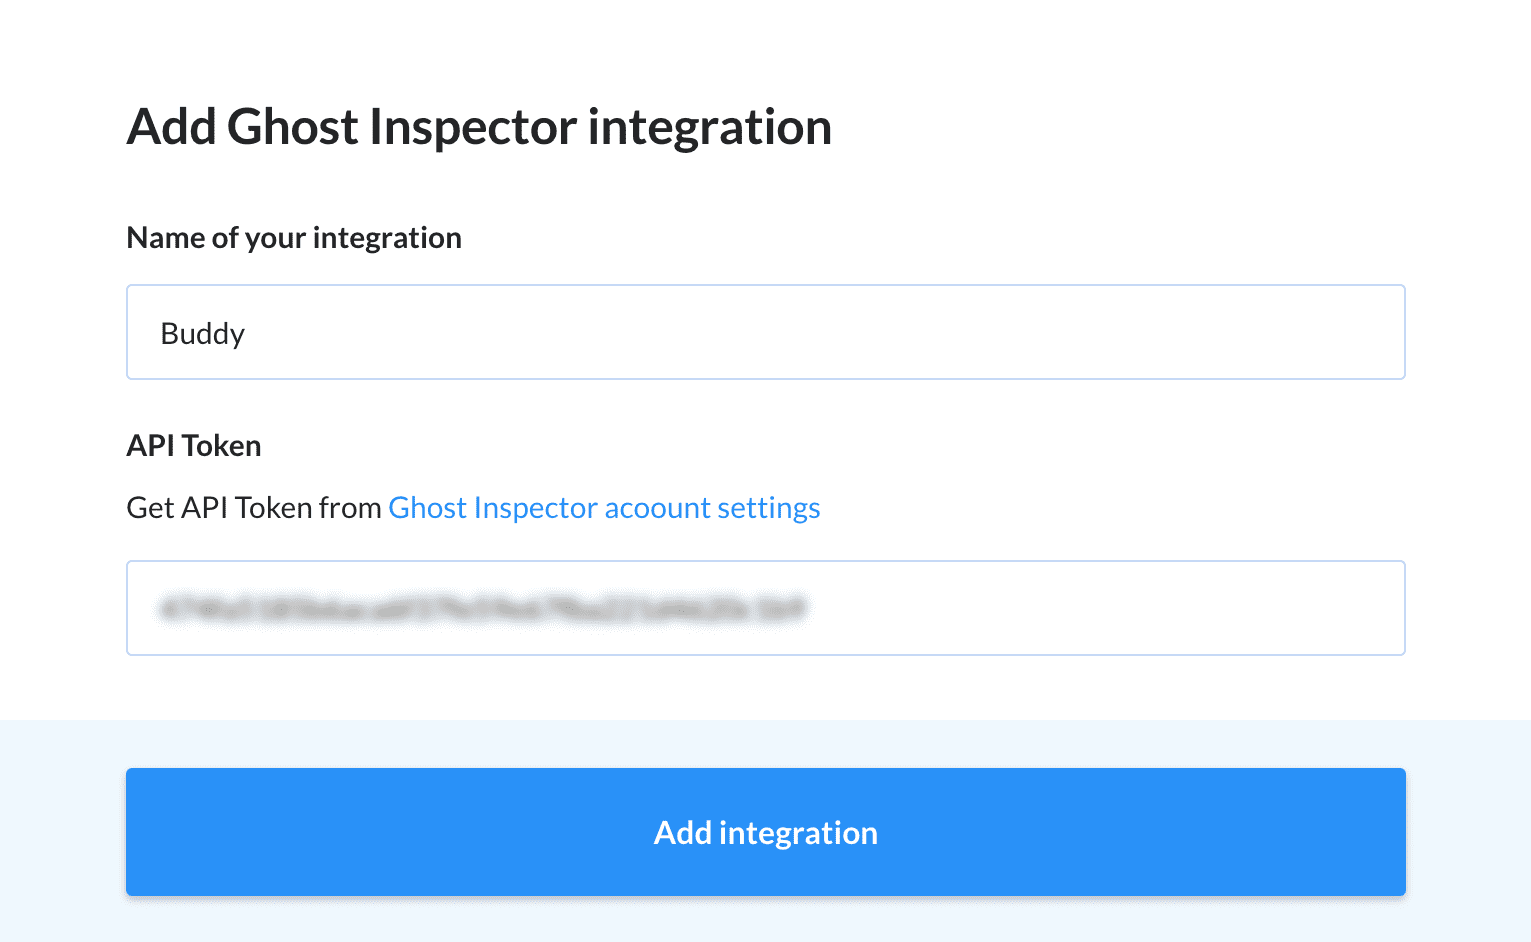 Adding a Ghost Inspector integration